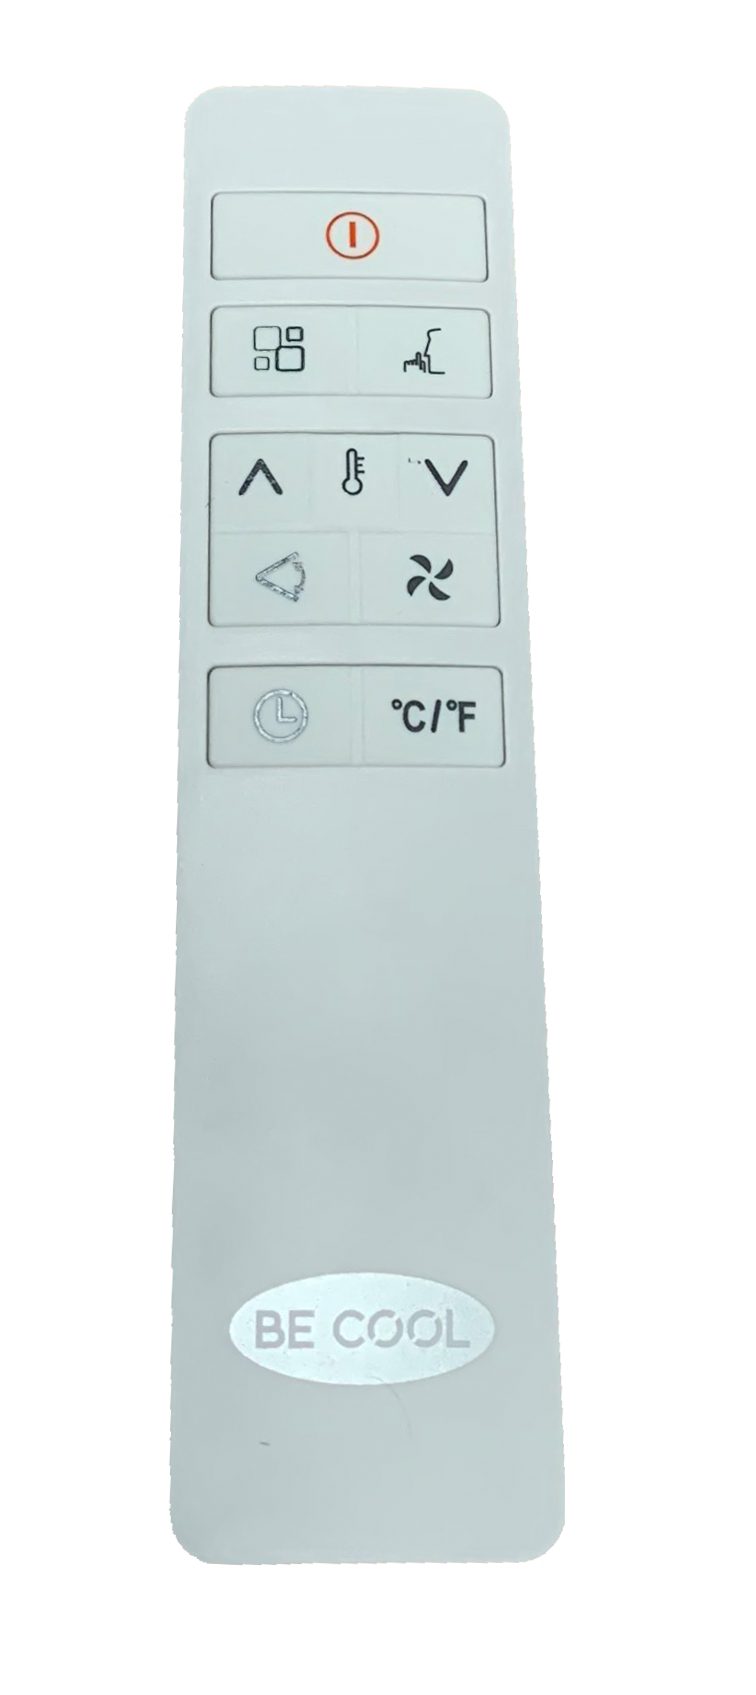 Kühlen cool - BC16KL2201FW, 3-in-1-Klimagerät Klimaanlage, - mobile Mobiles be Klimagerät Lüftung, Entfeuchten Energiesparmodus